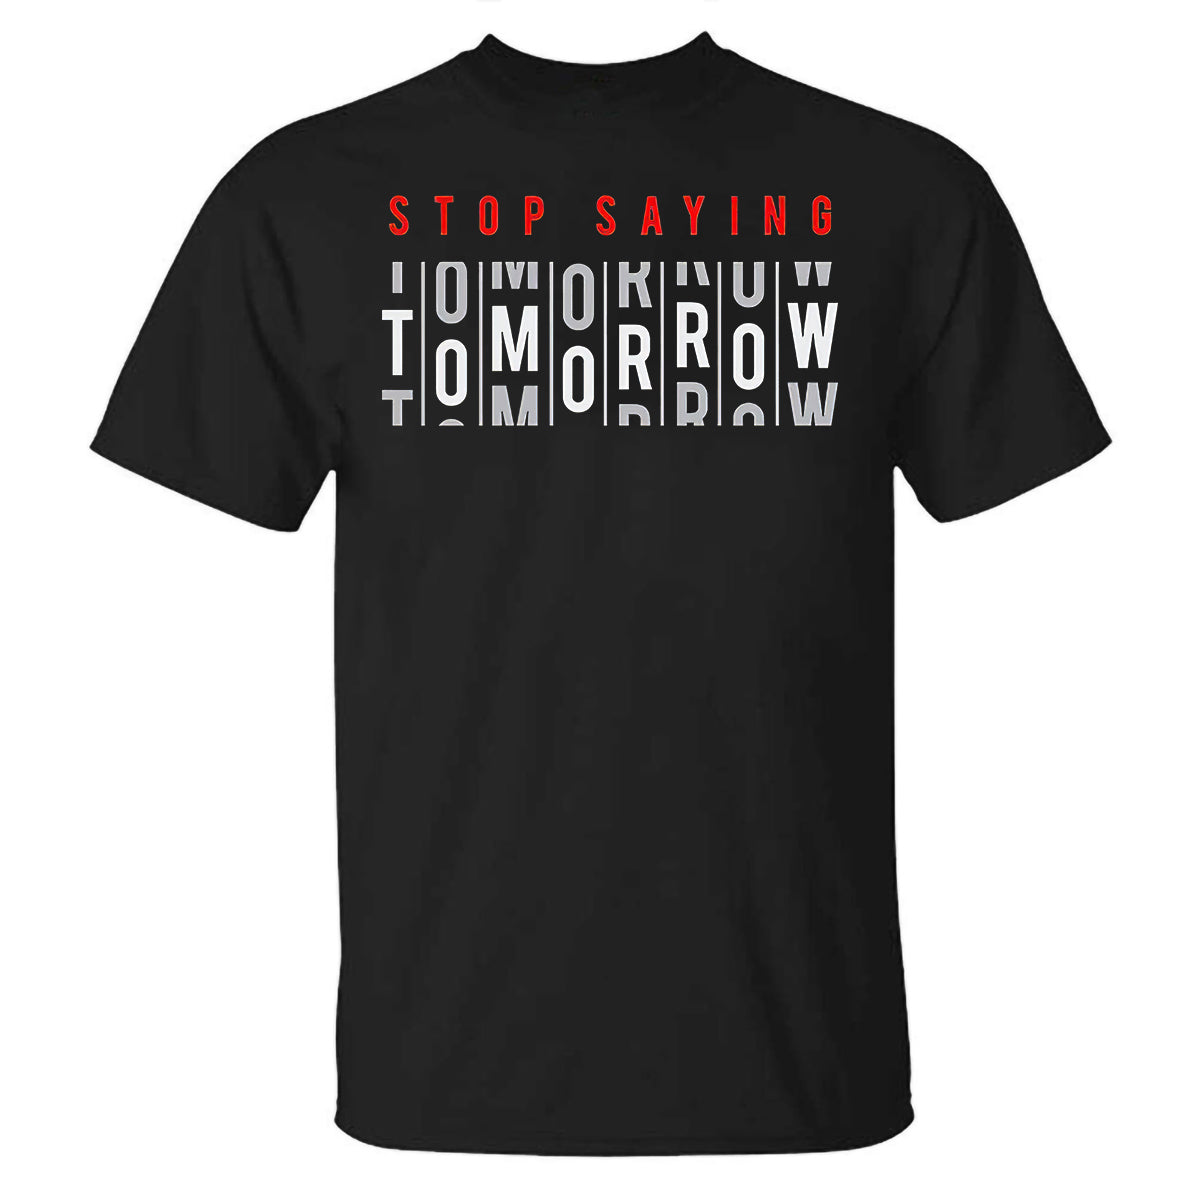 GrootWear Stop Saying Tomorrow Printed T-shirt